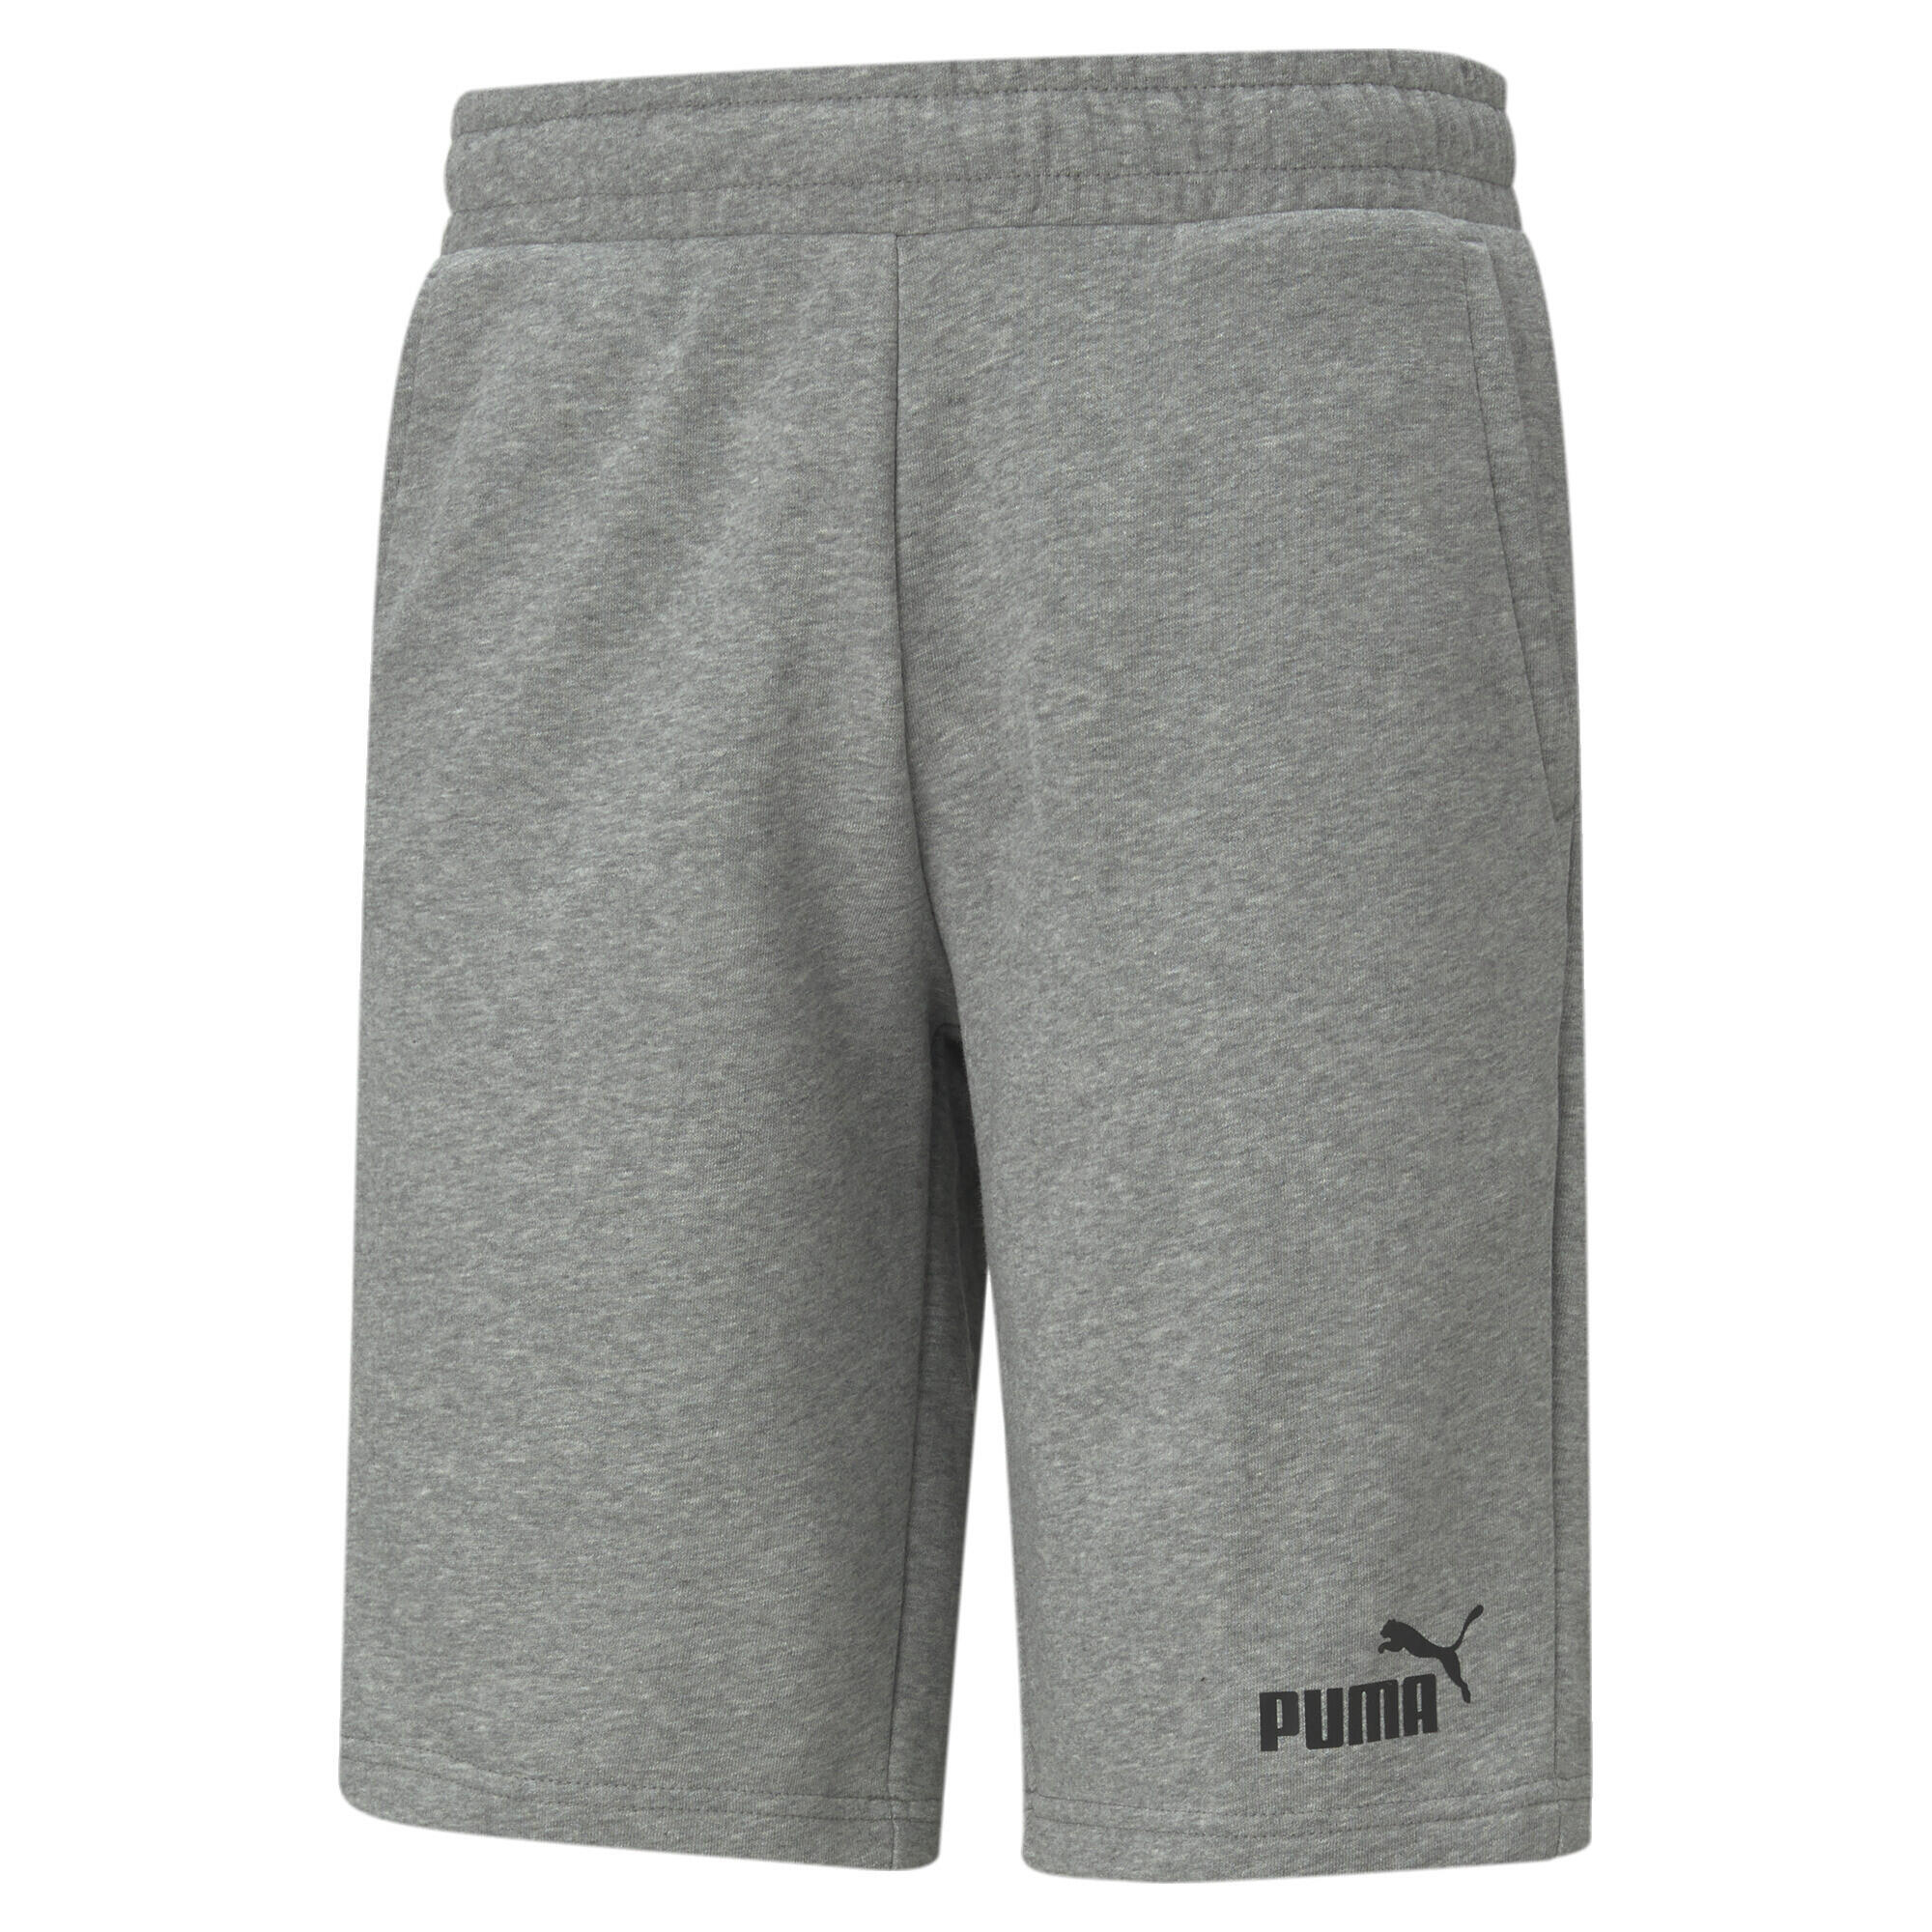 PUMA Mens Essentials Shorts - Medium Gray Heather 1/6